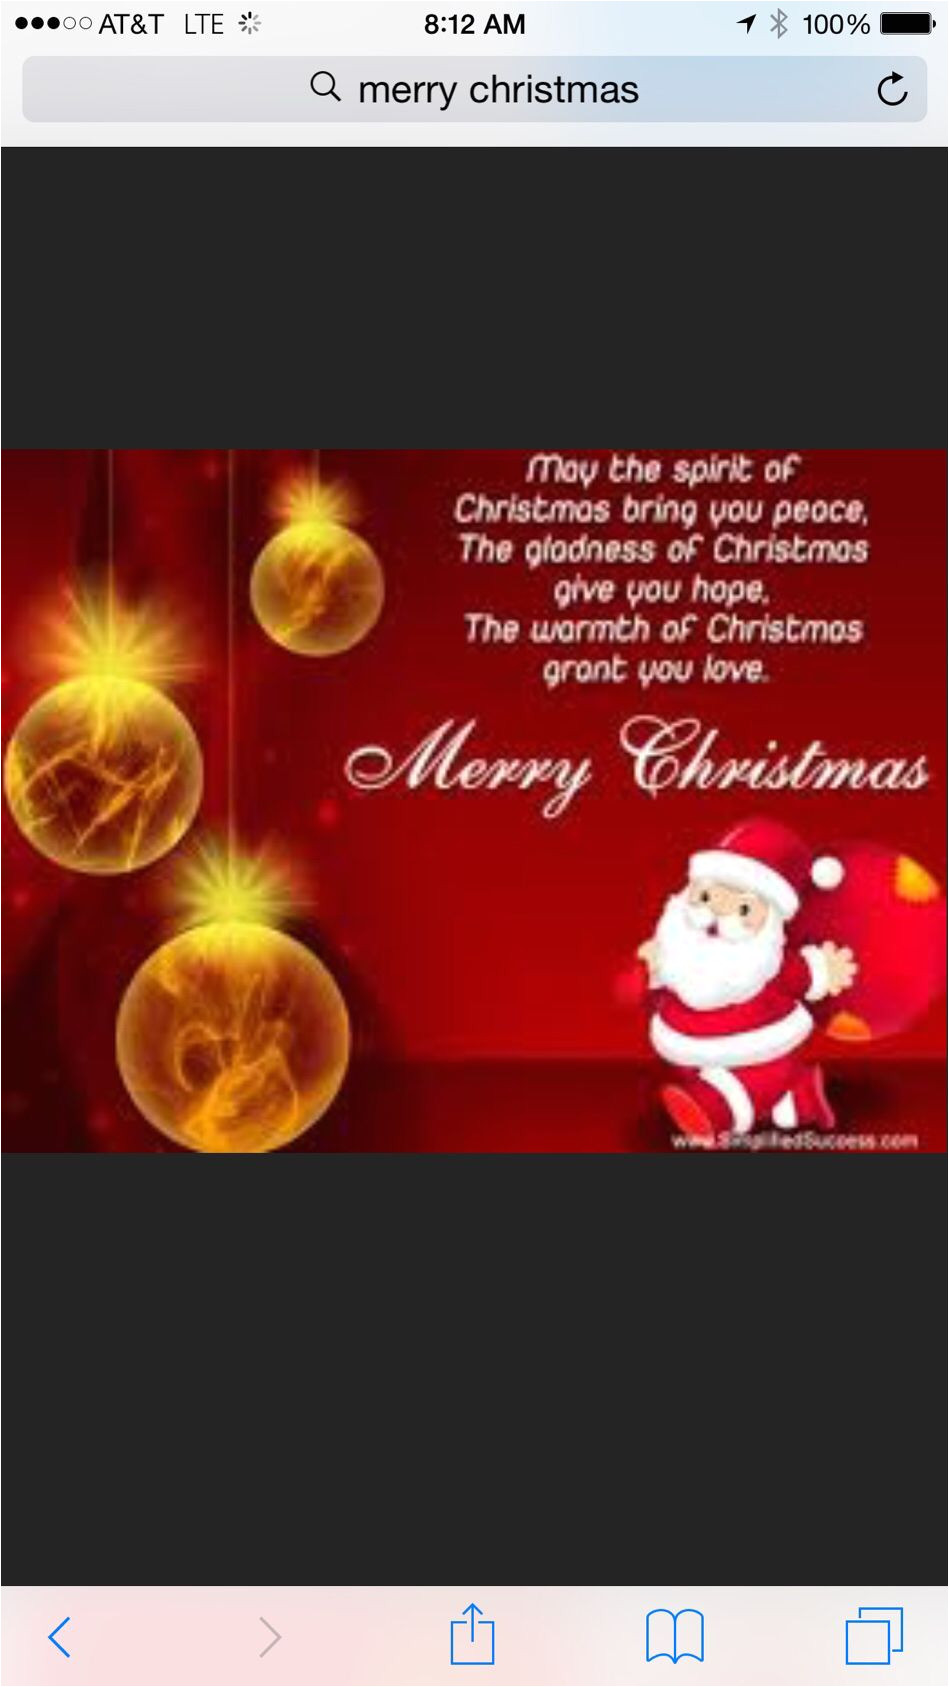 Greeting Sayings for Christmas Card Merry Christmas Everyone with Images Merry Christmas